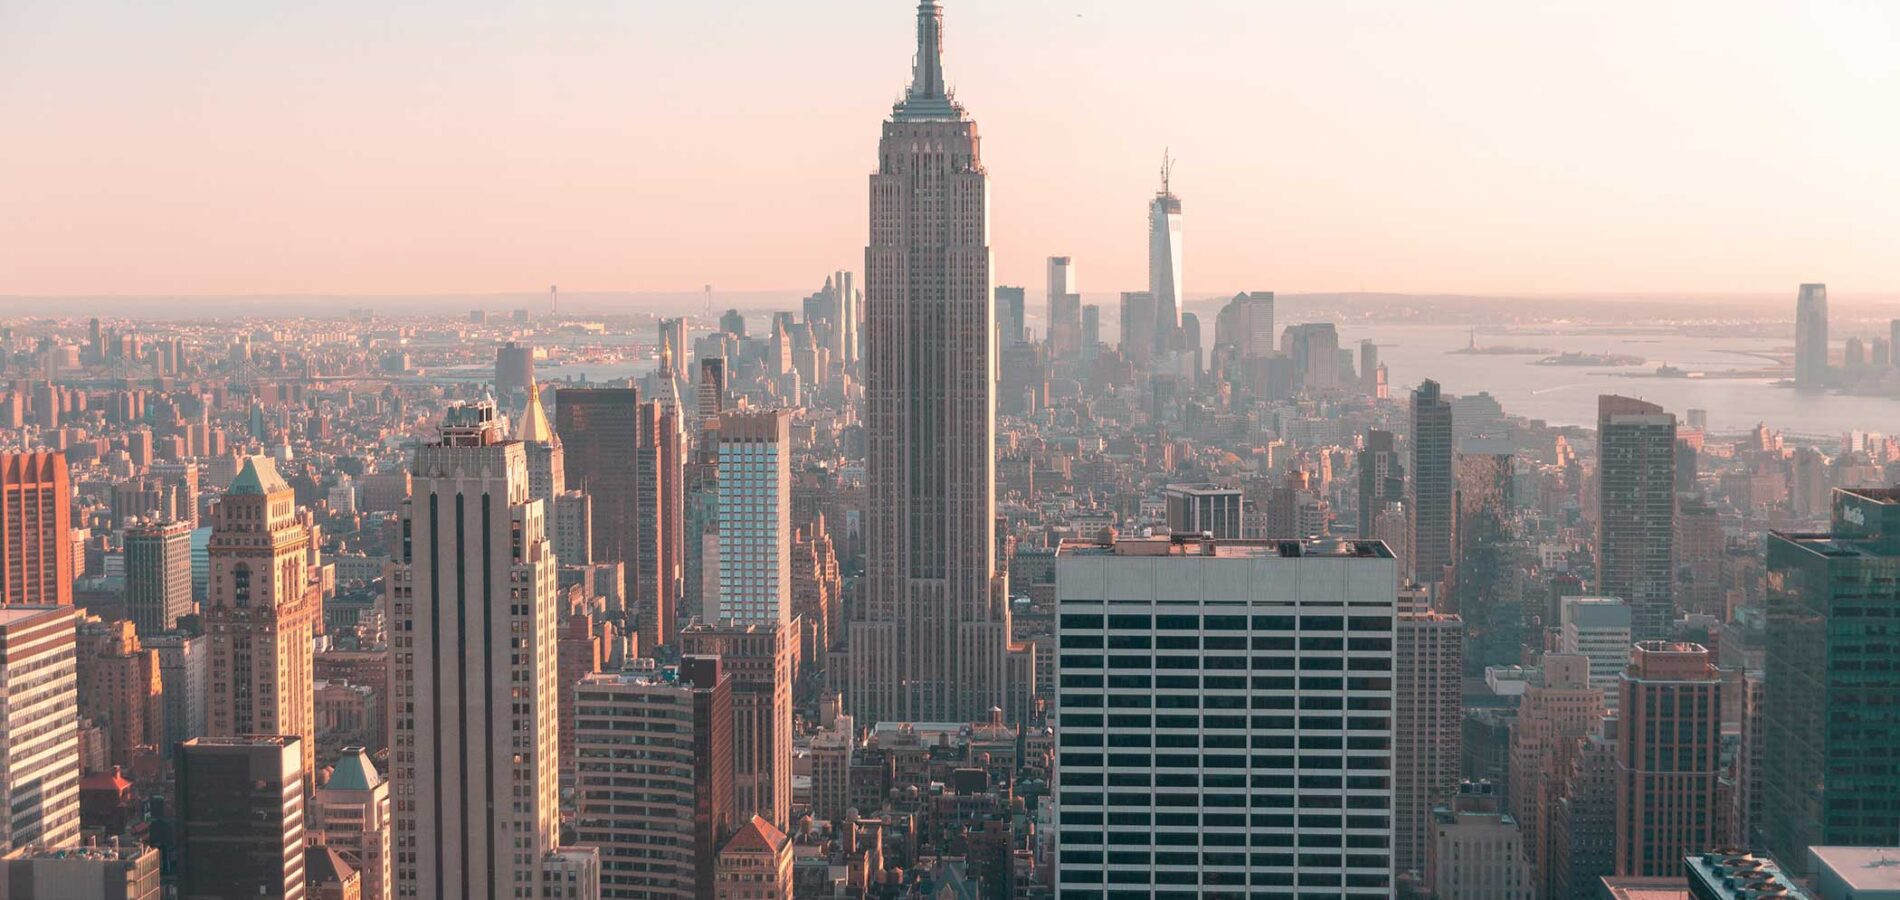 Empire State Building Photo by Roberto Vivancos